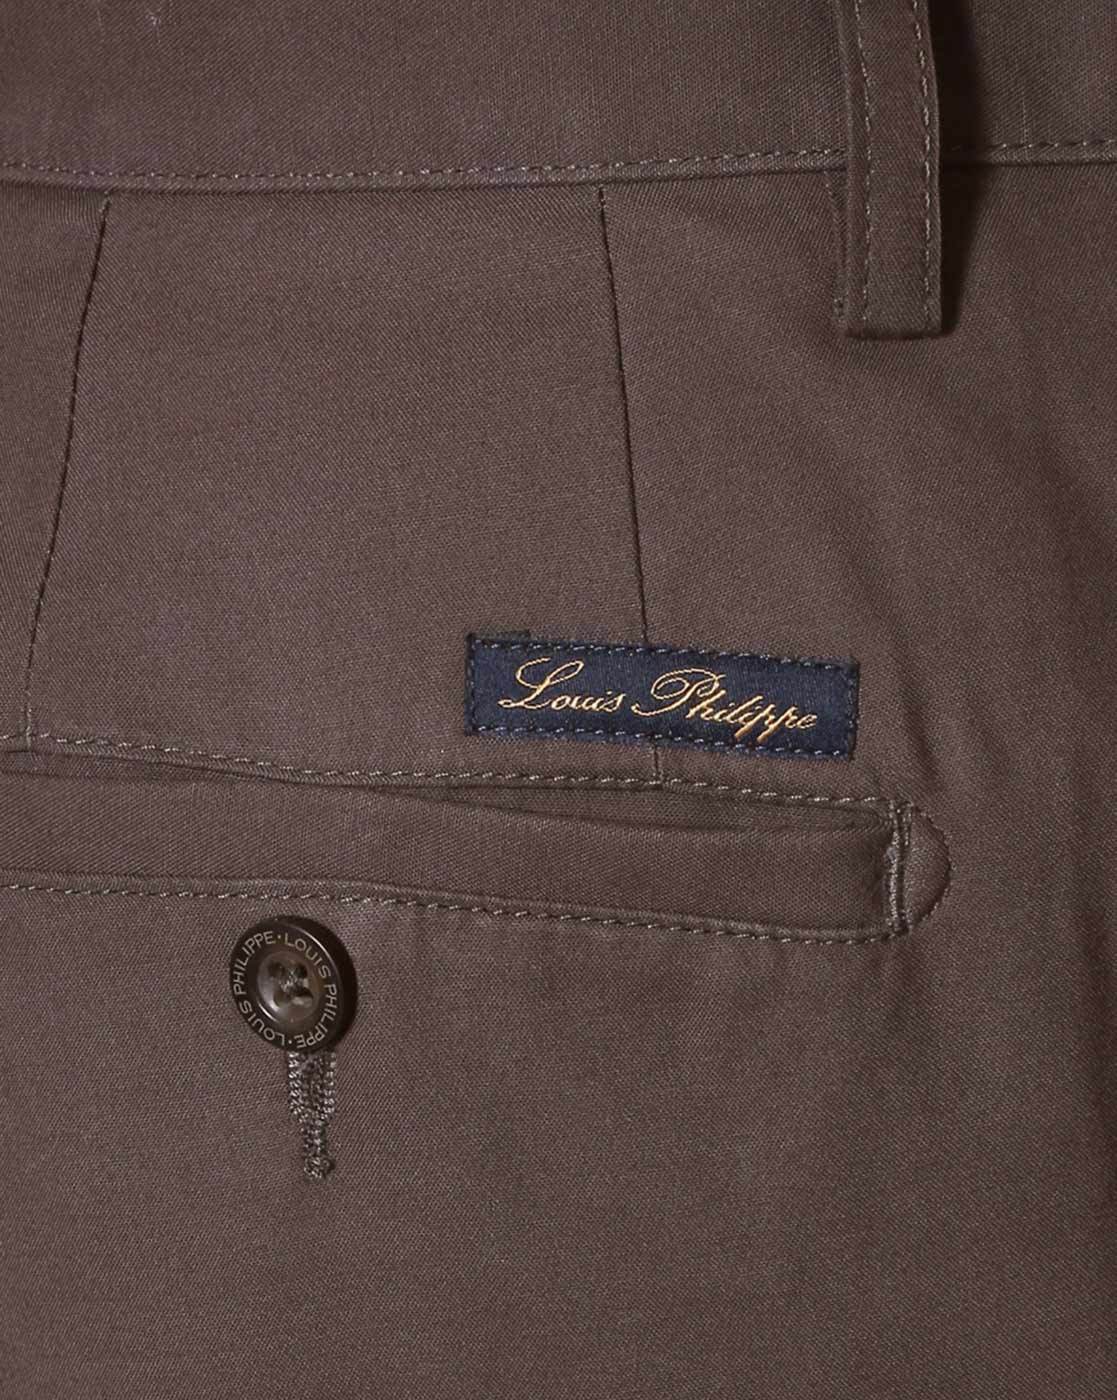 Buy Louis Philippe Men Grey Trousers online